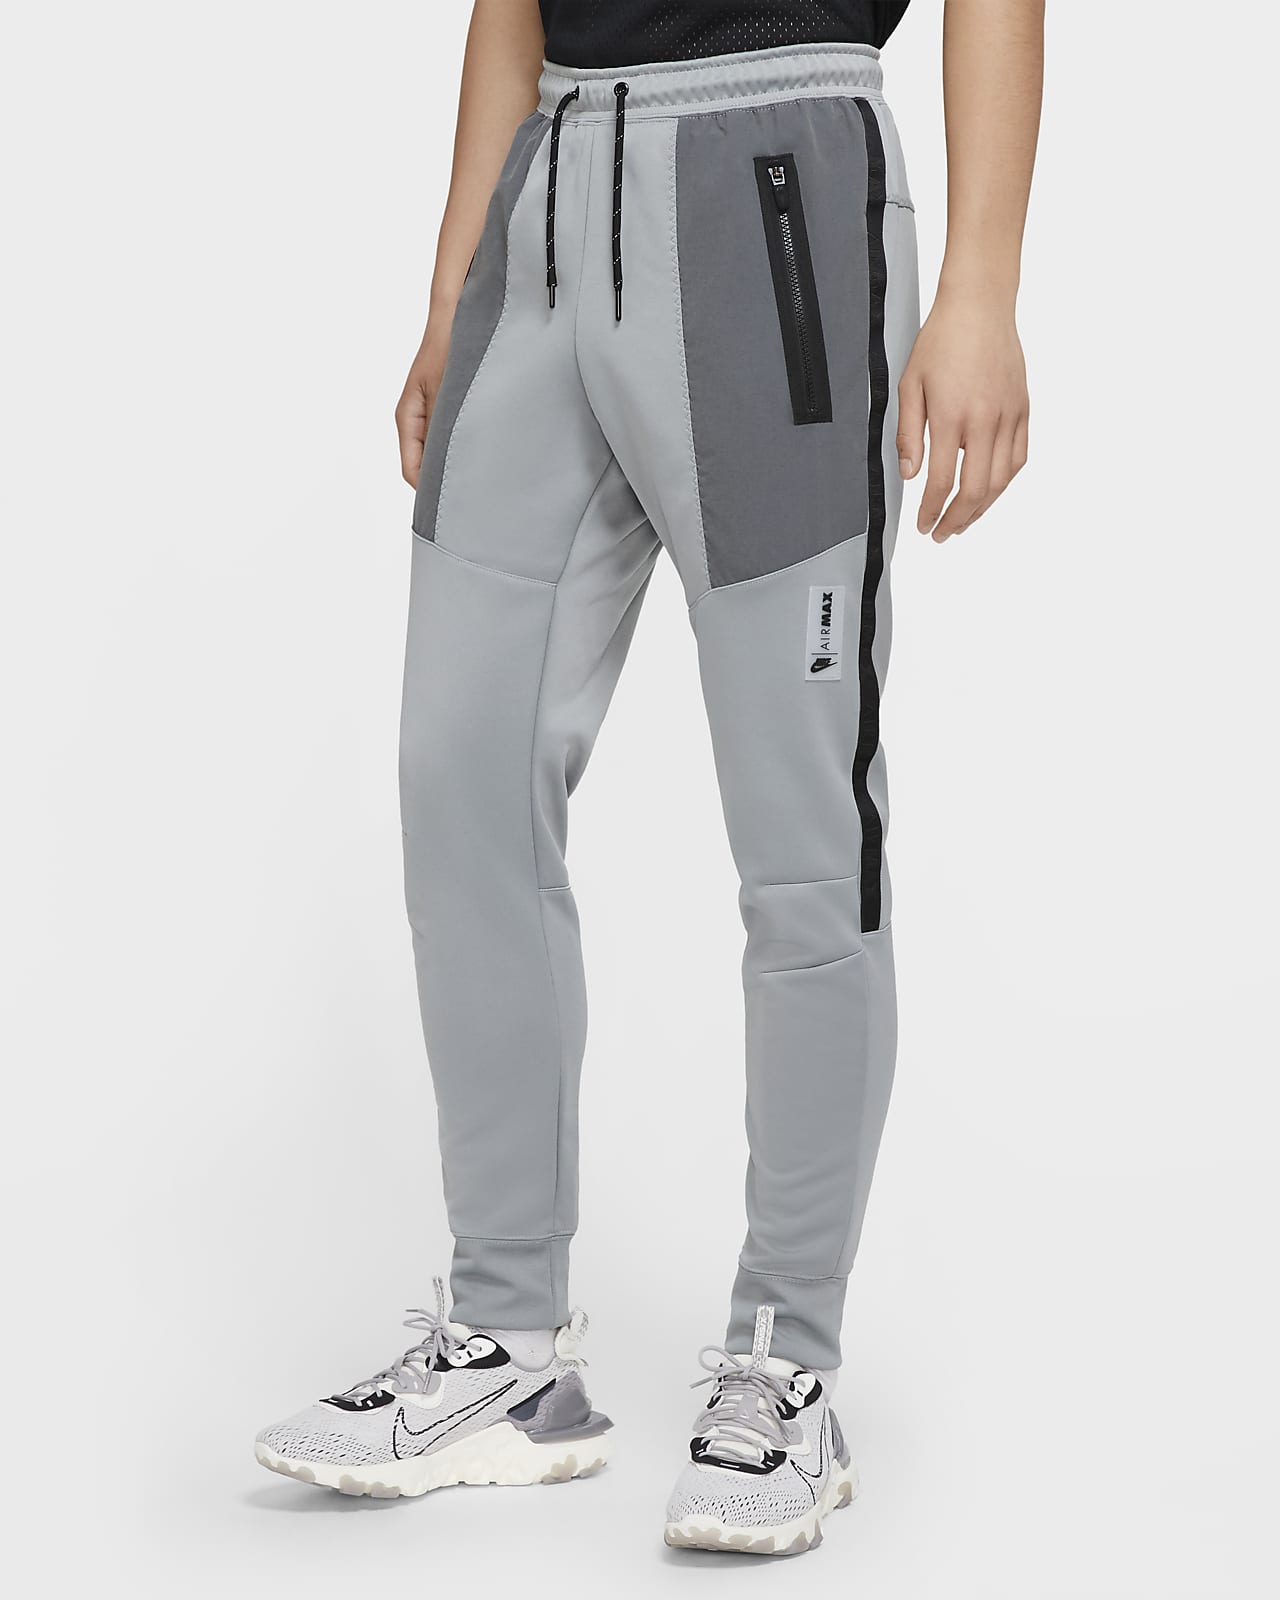 Nike Sportswear Air Max Men's Trousers. Nike MA